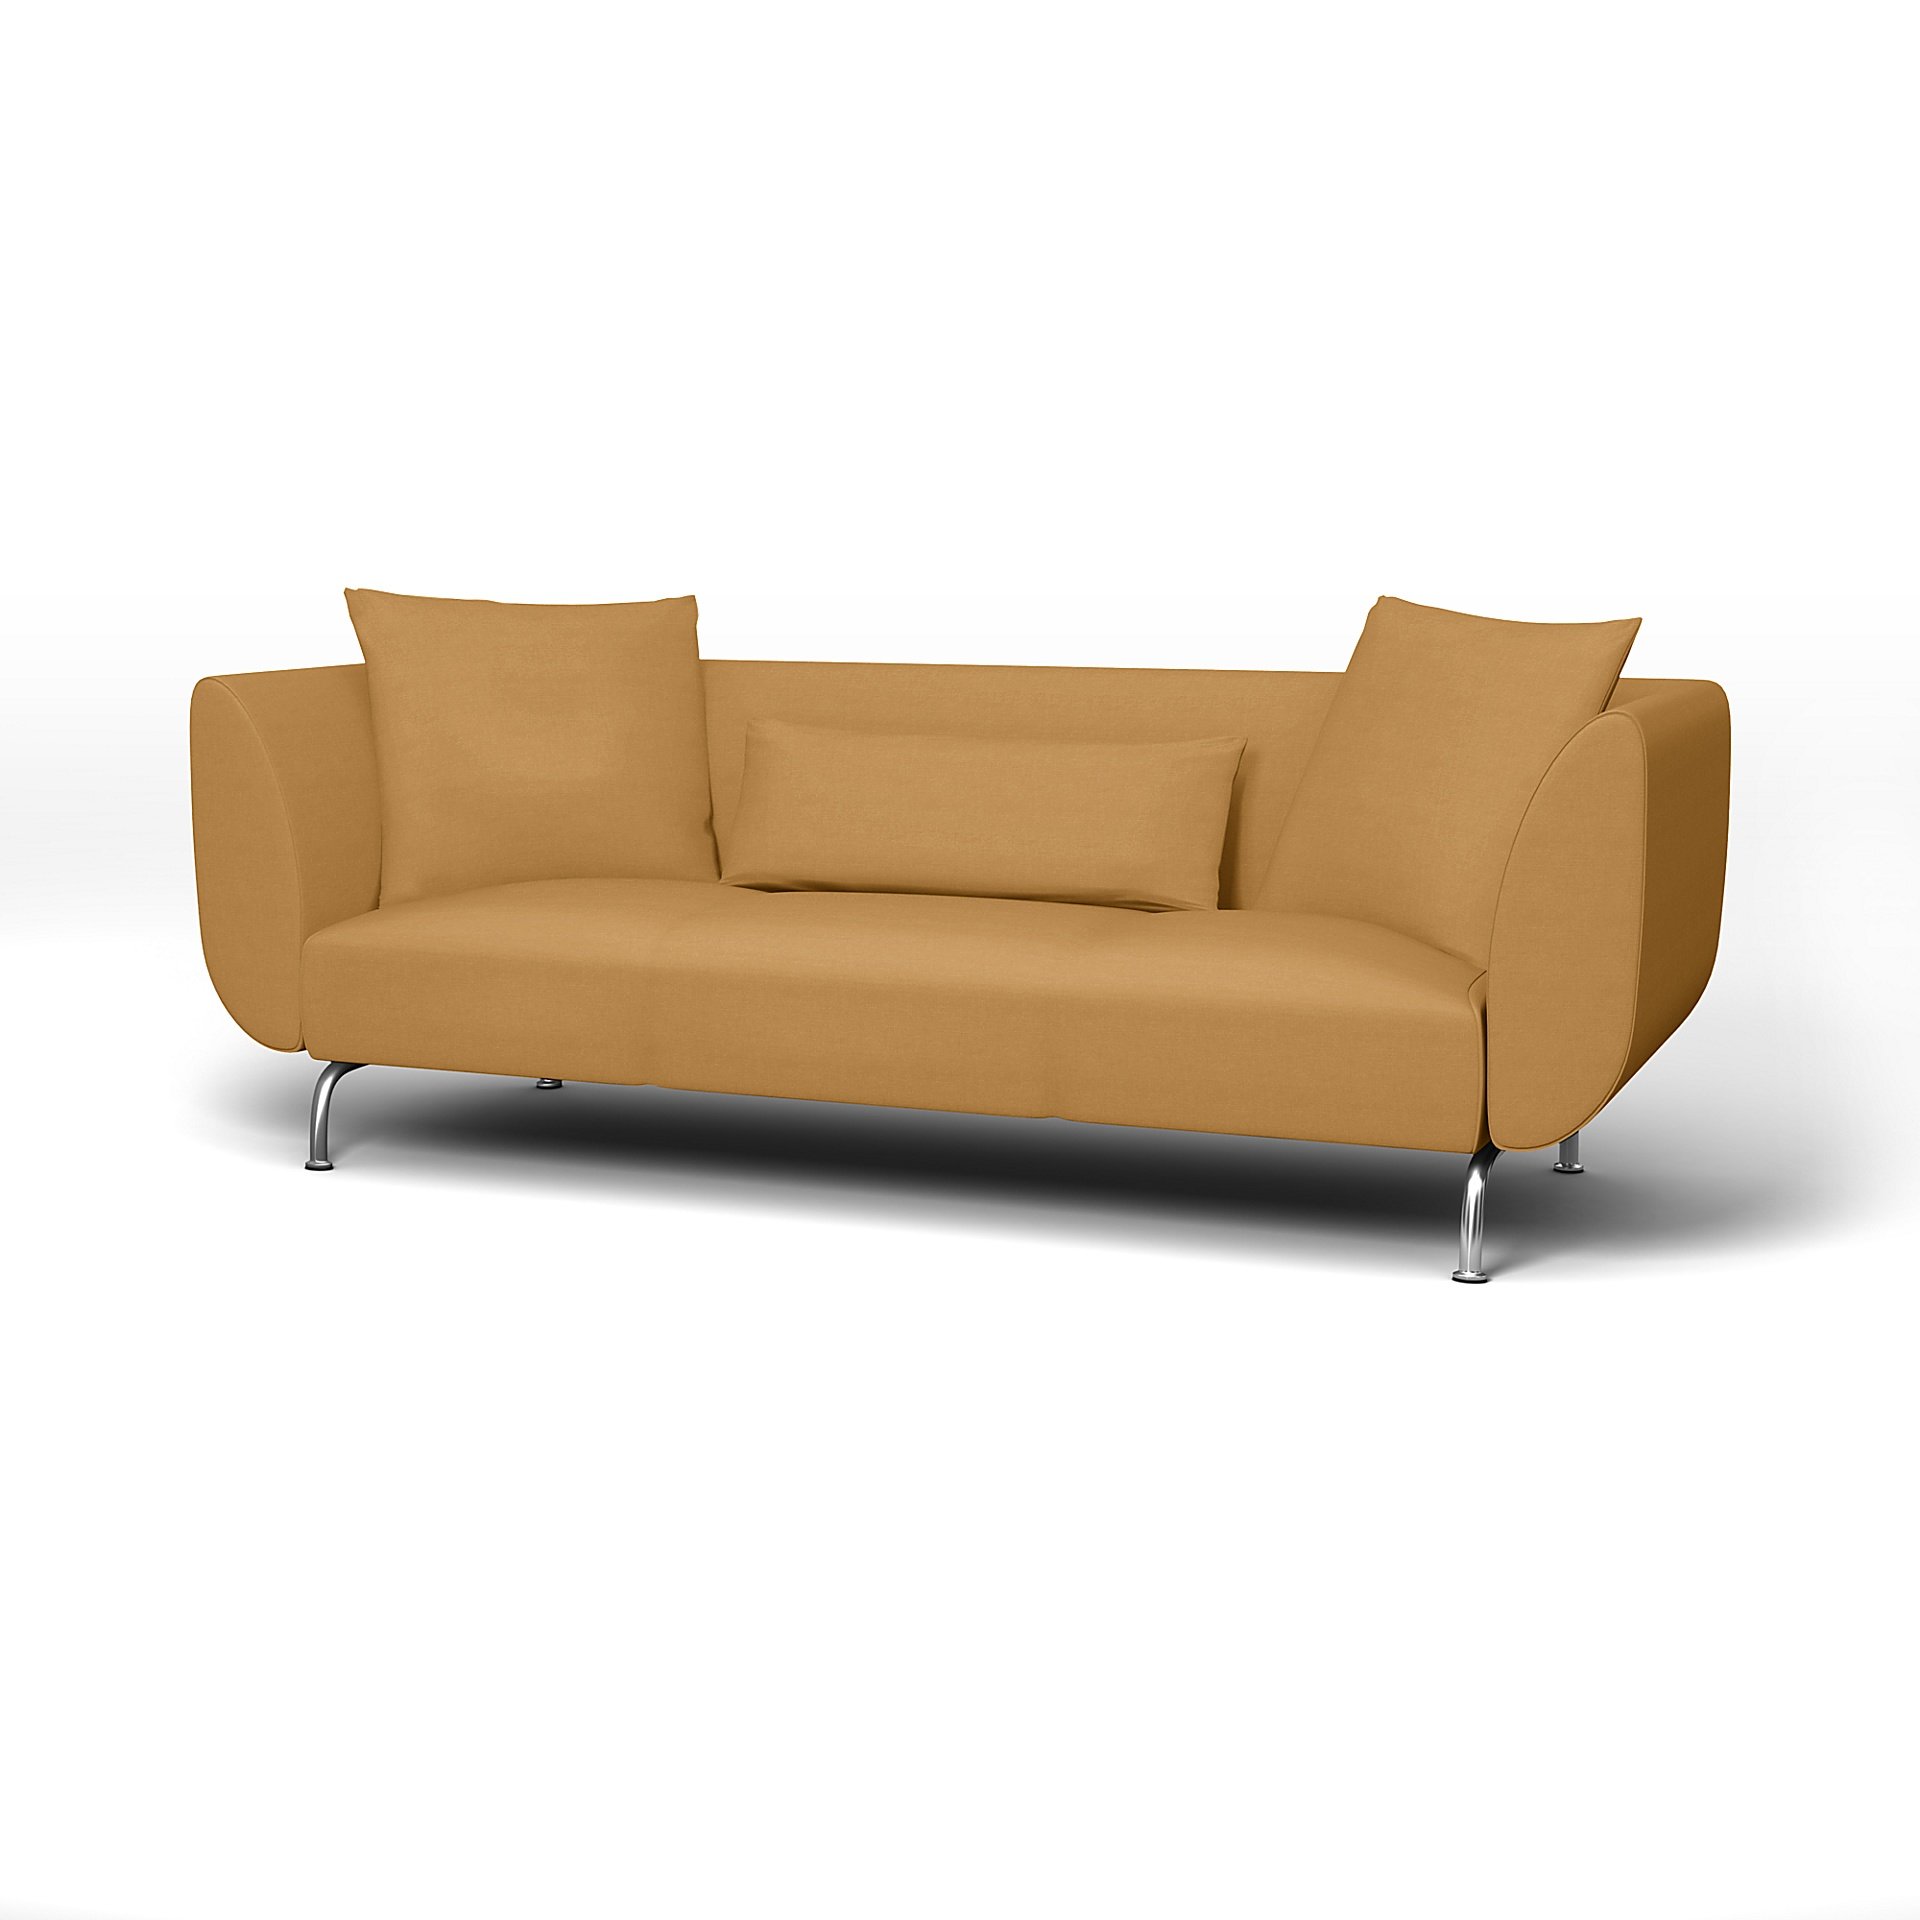 IKEA - Stromstad 3 Seater Sofa Cover, Mustard, Linen - Bemz